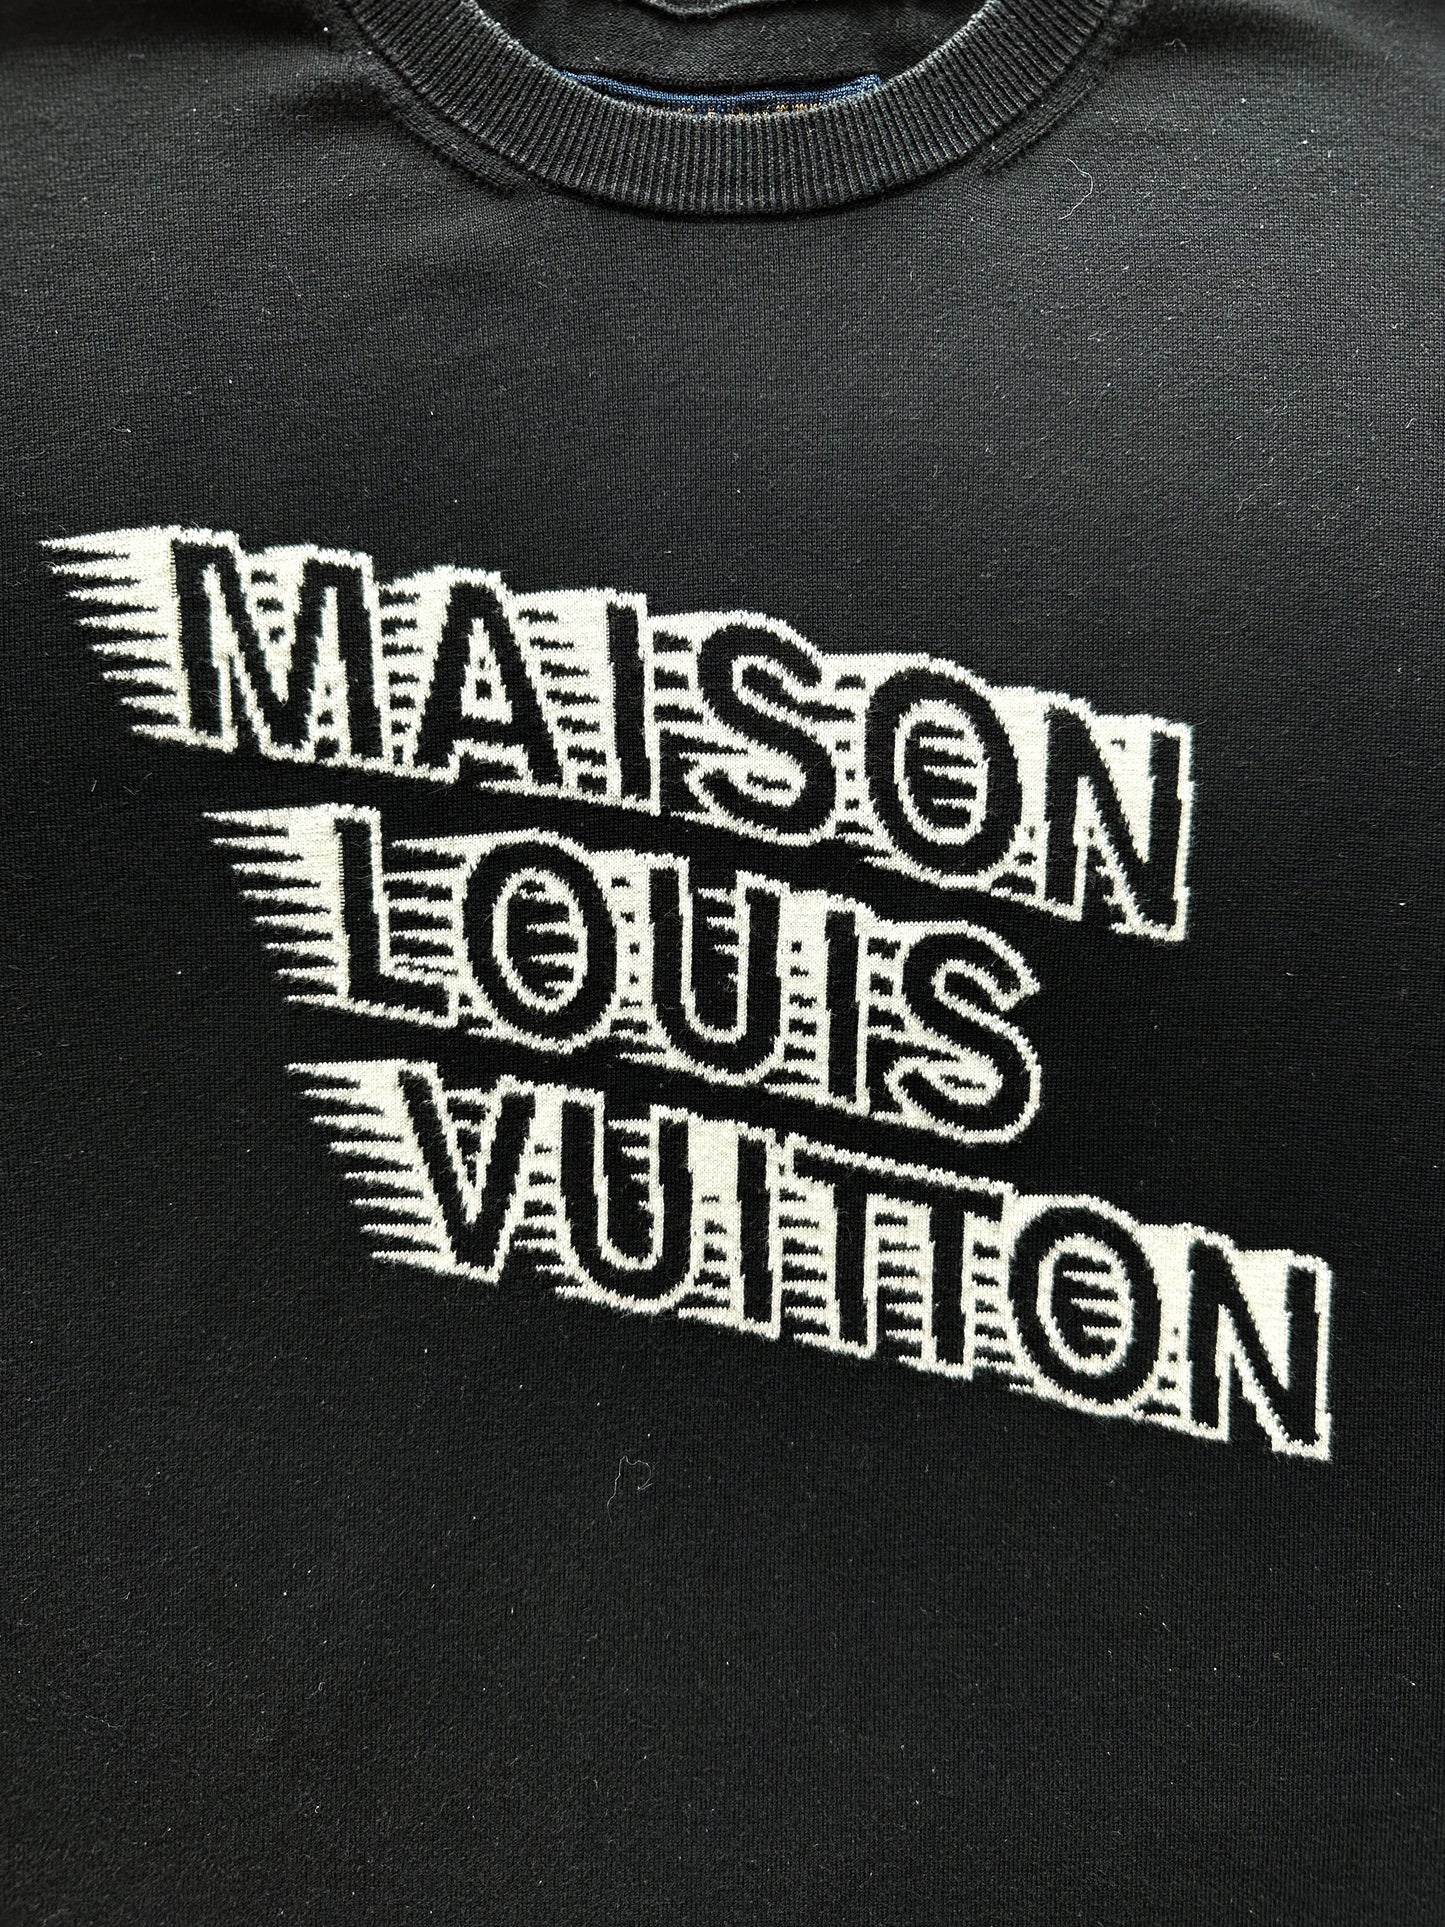 Louis Vuitton Black Intarsia Checkered Logo Tee